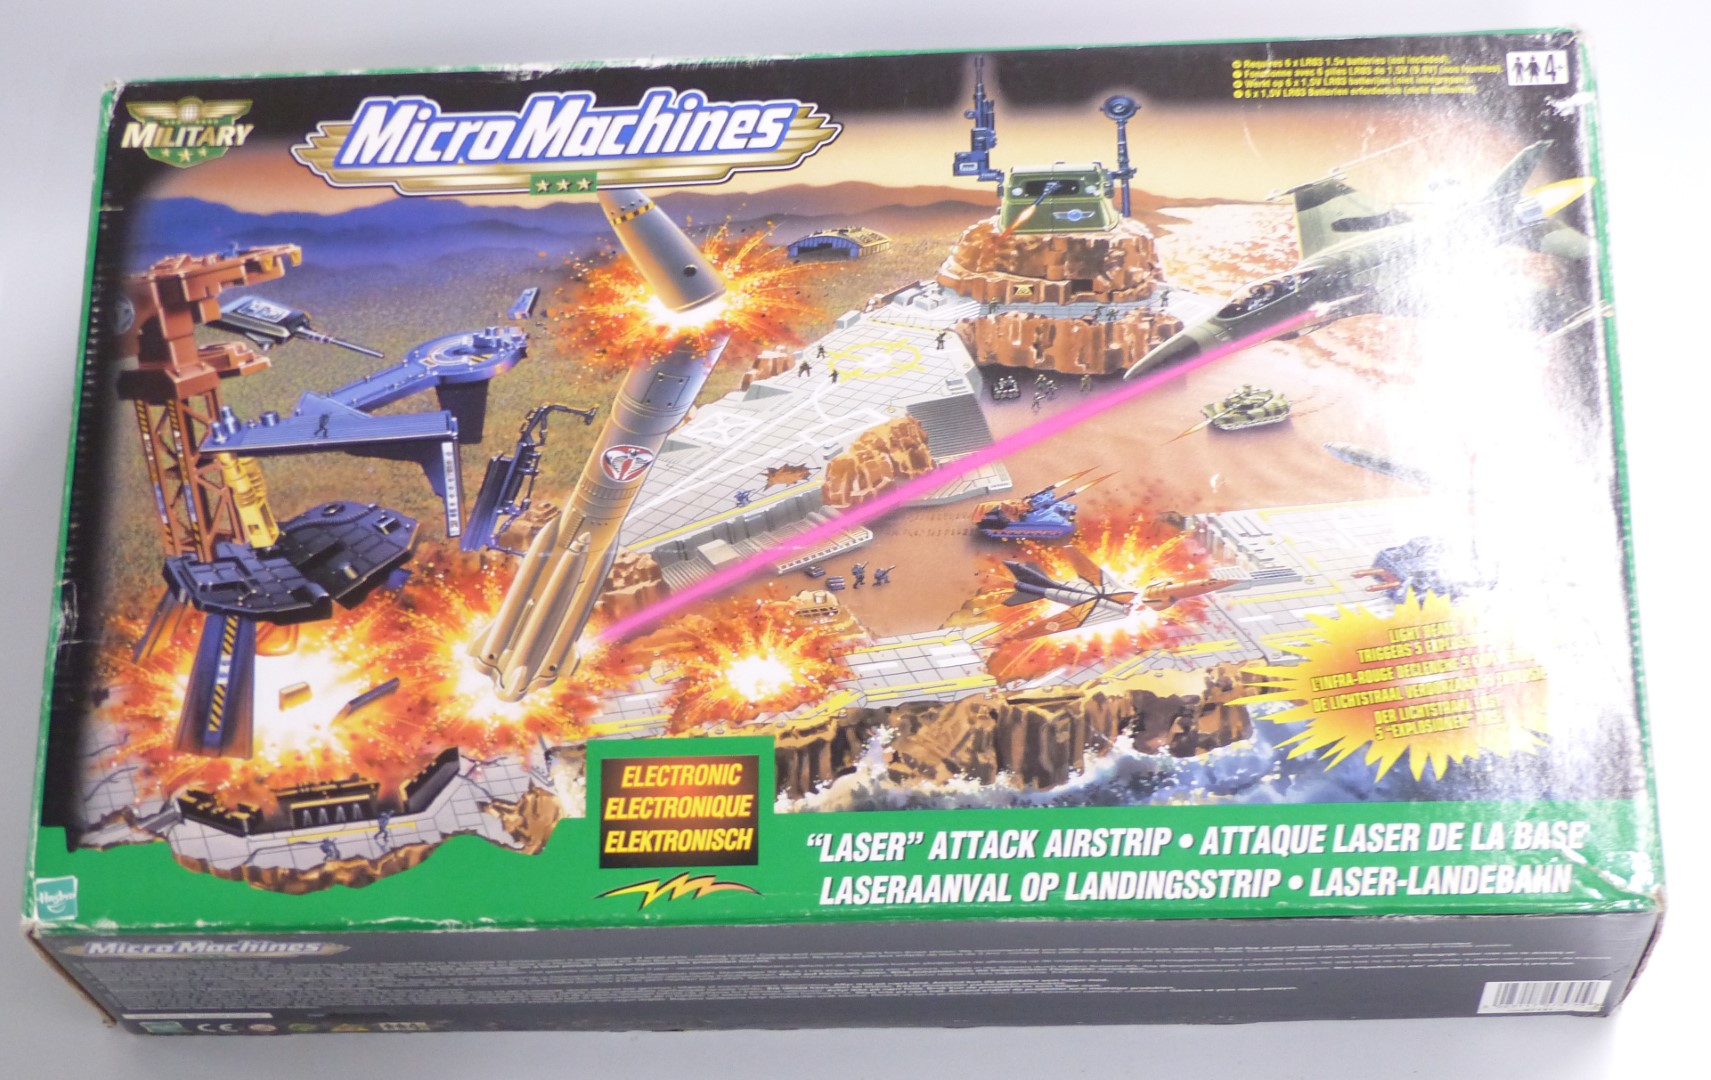 Hasbro Micro Machines Military Laser Attack Airstrip playset, in original box.